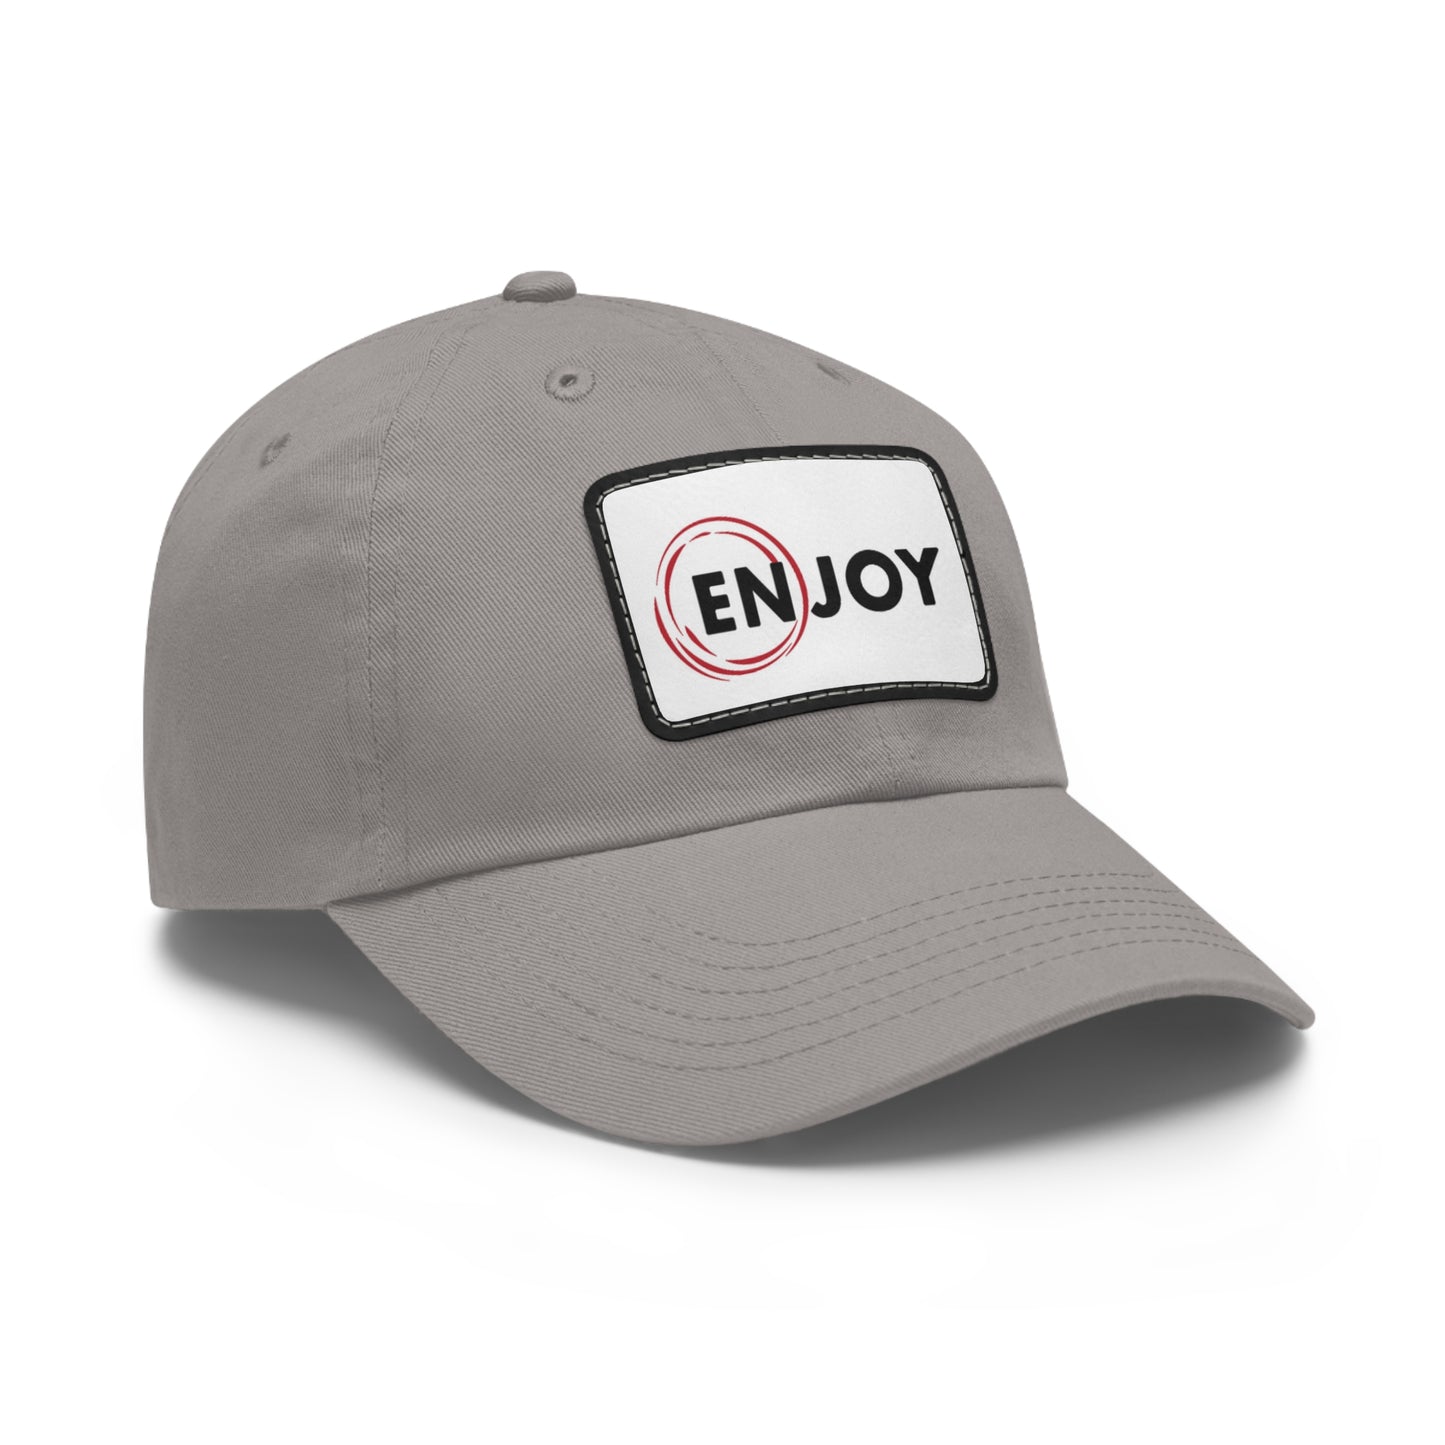 ENJOY Hat